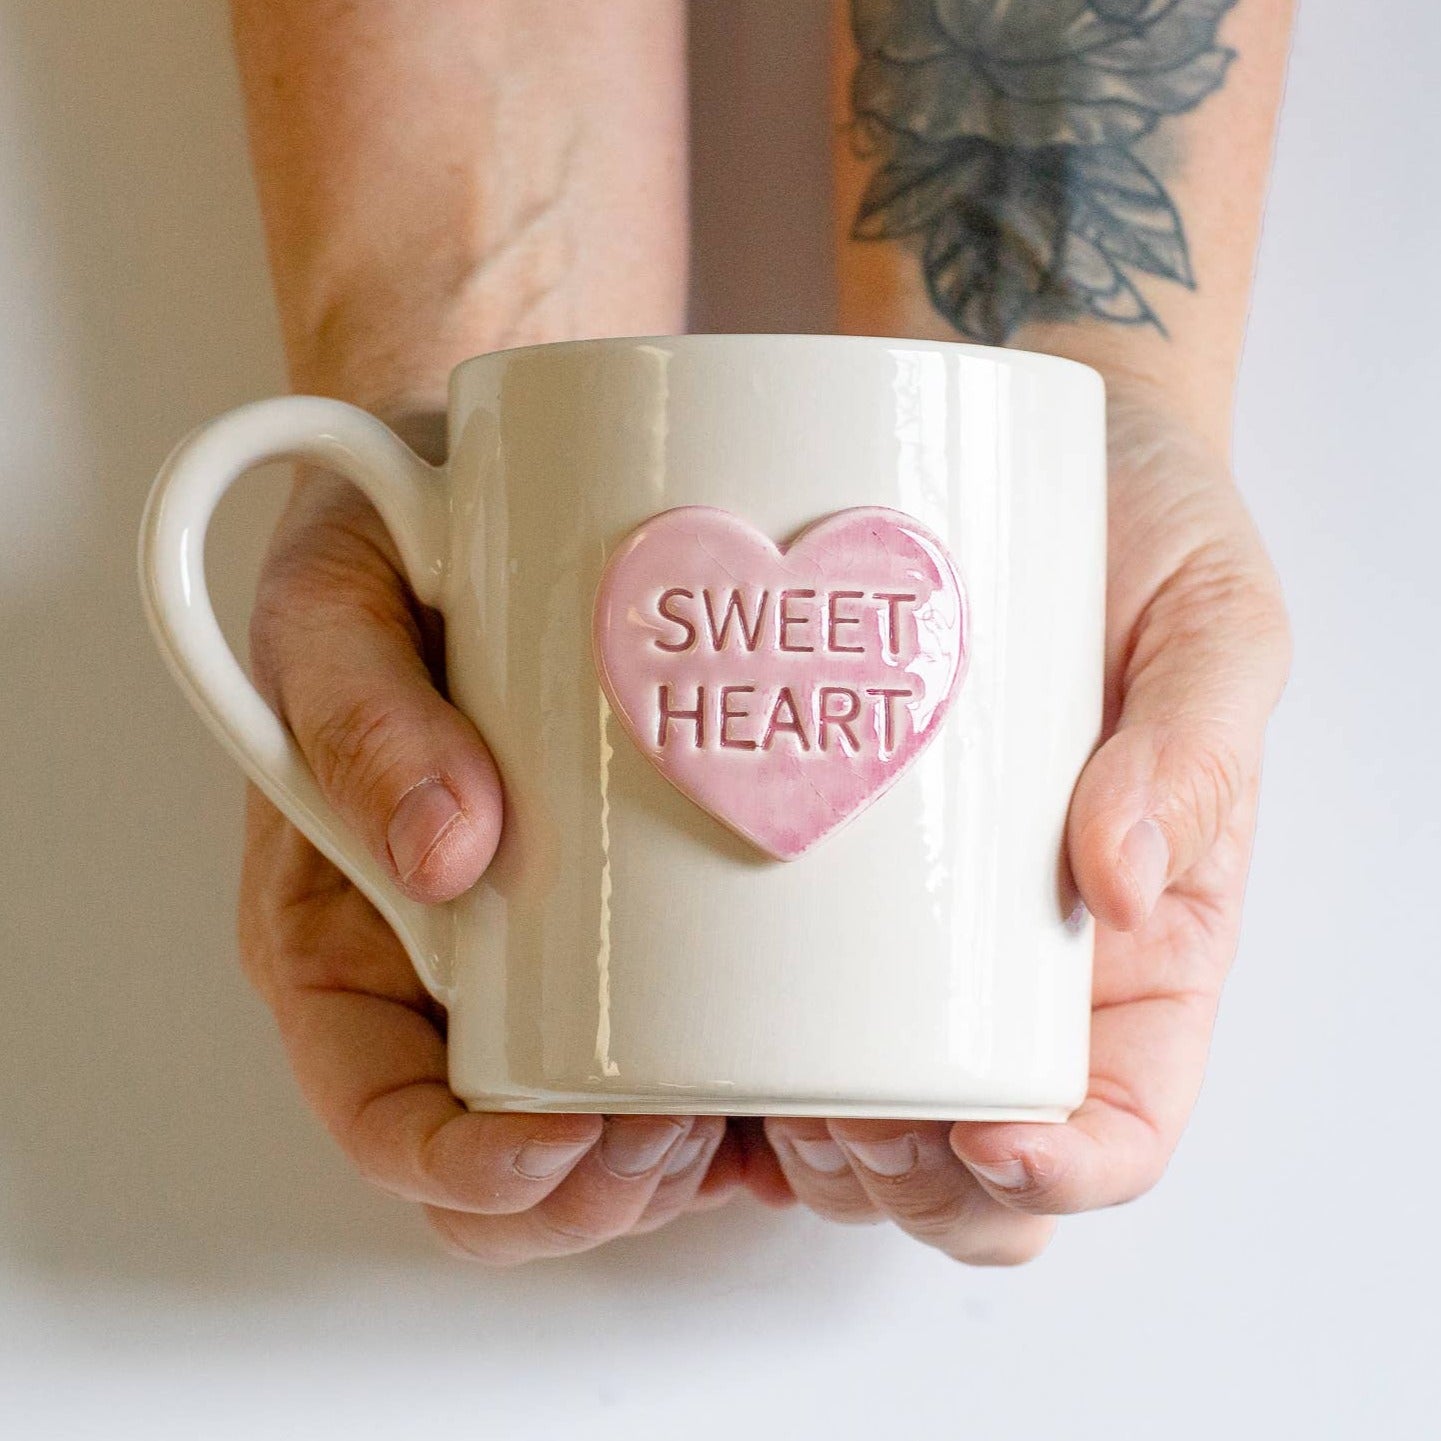 Candy Heart Mug Collection